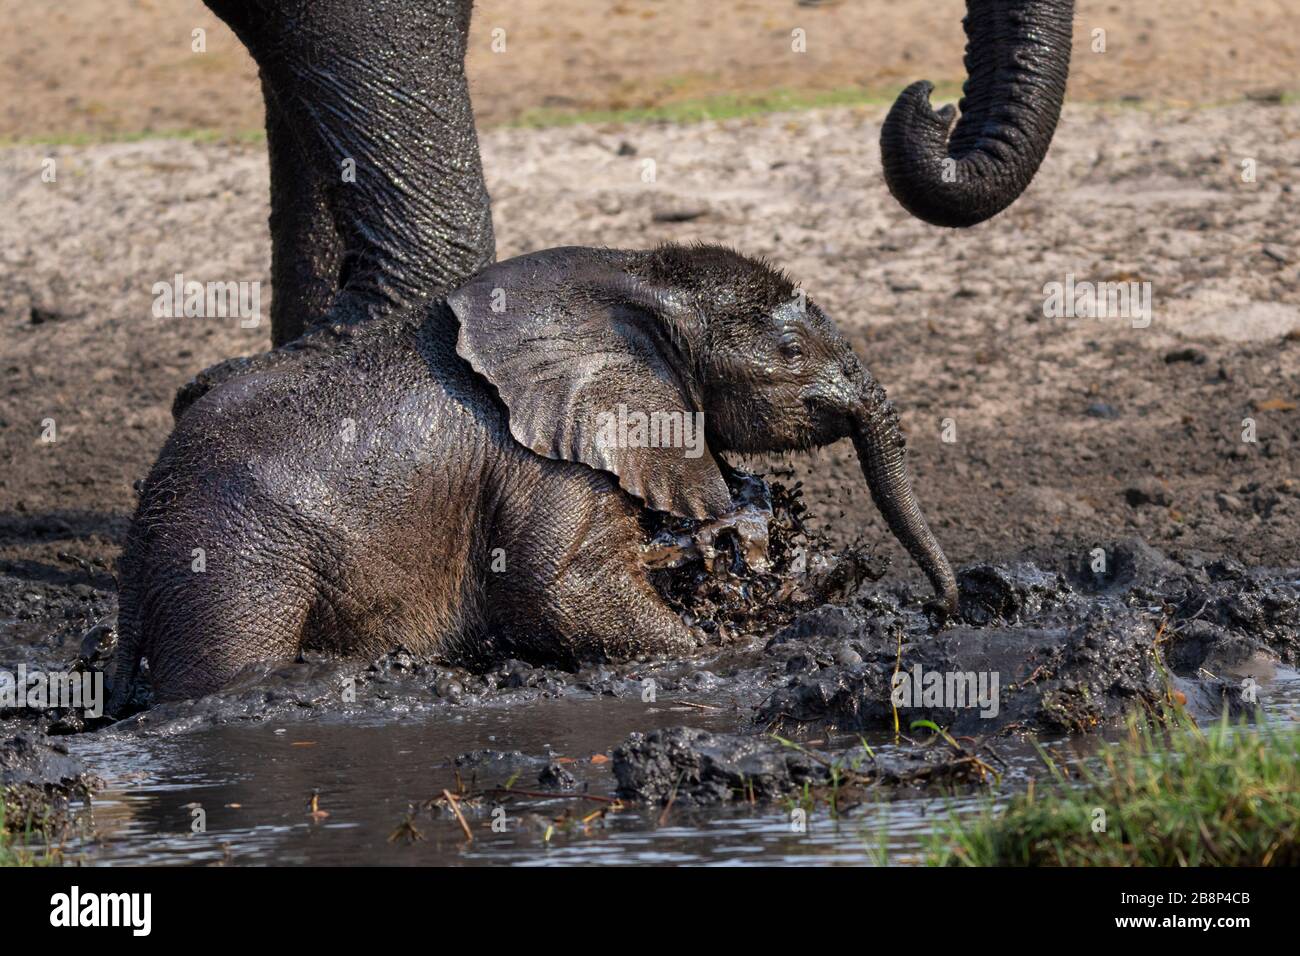 elephant calf mud bath Stock Photo